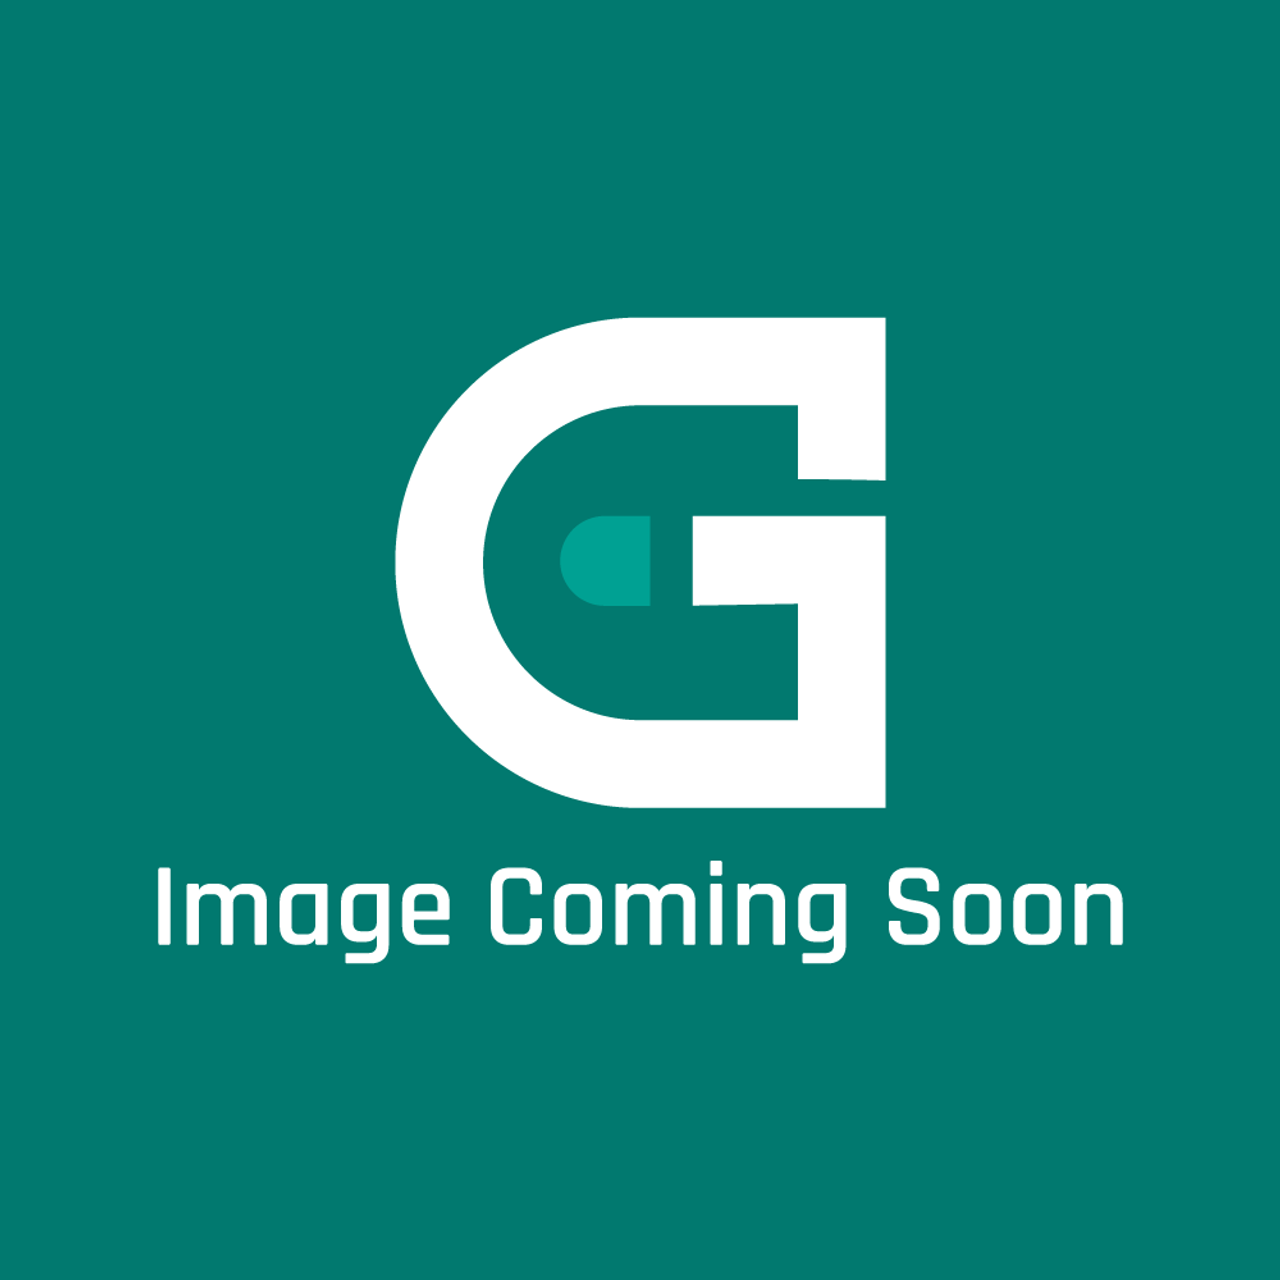 Garland G01994-1-6 - Burner Bracket - Image Coming Soon!